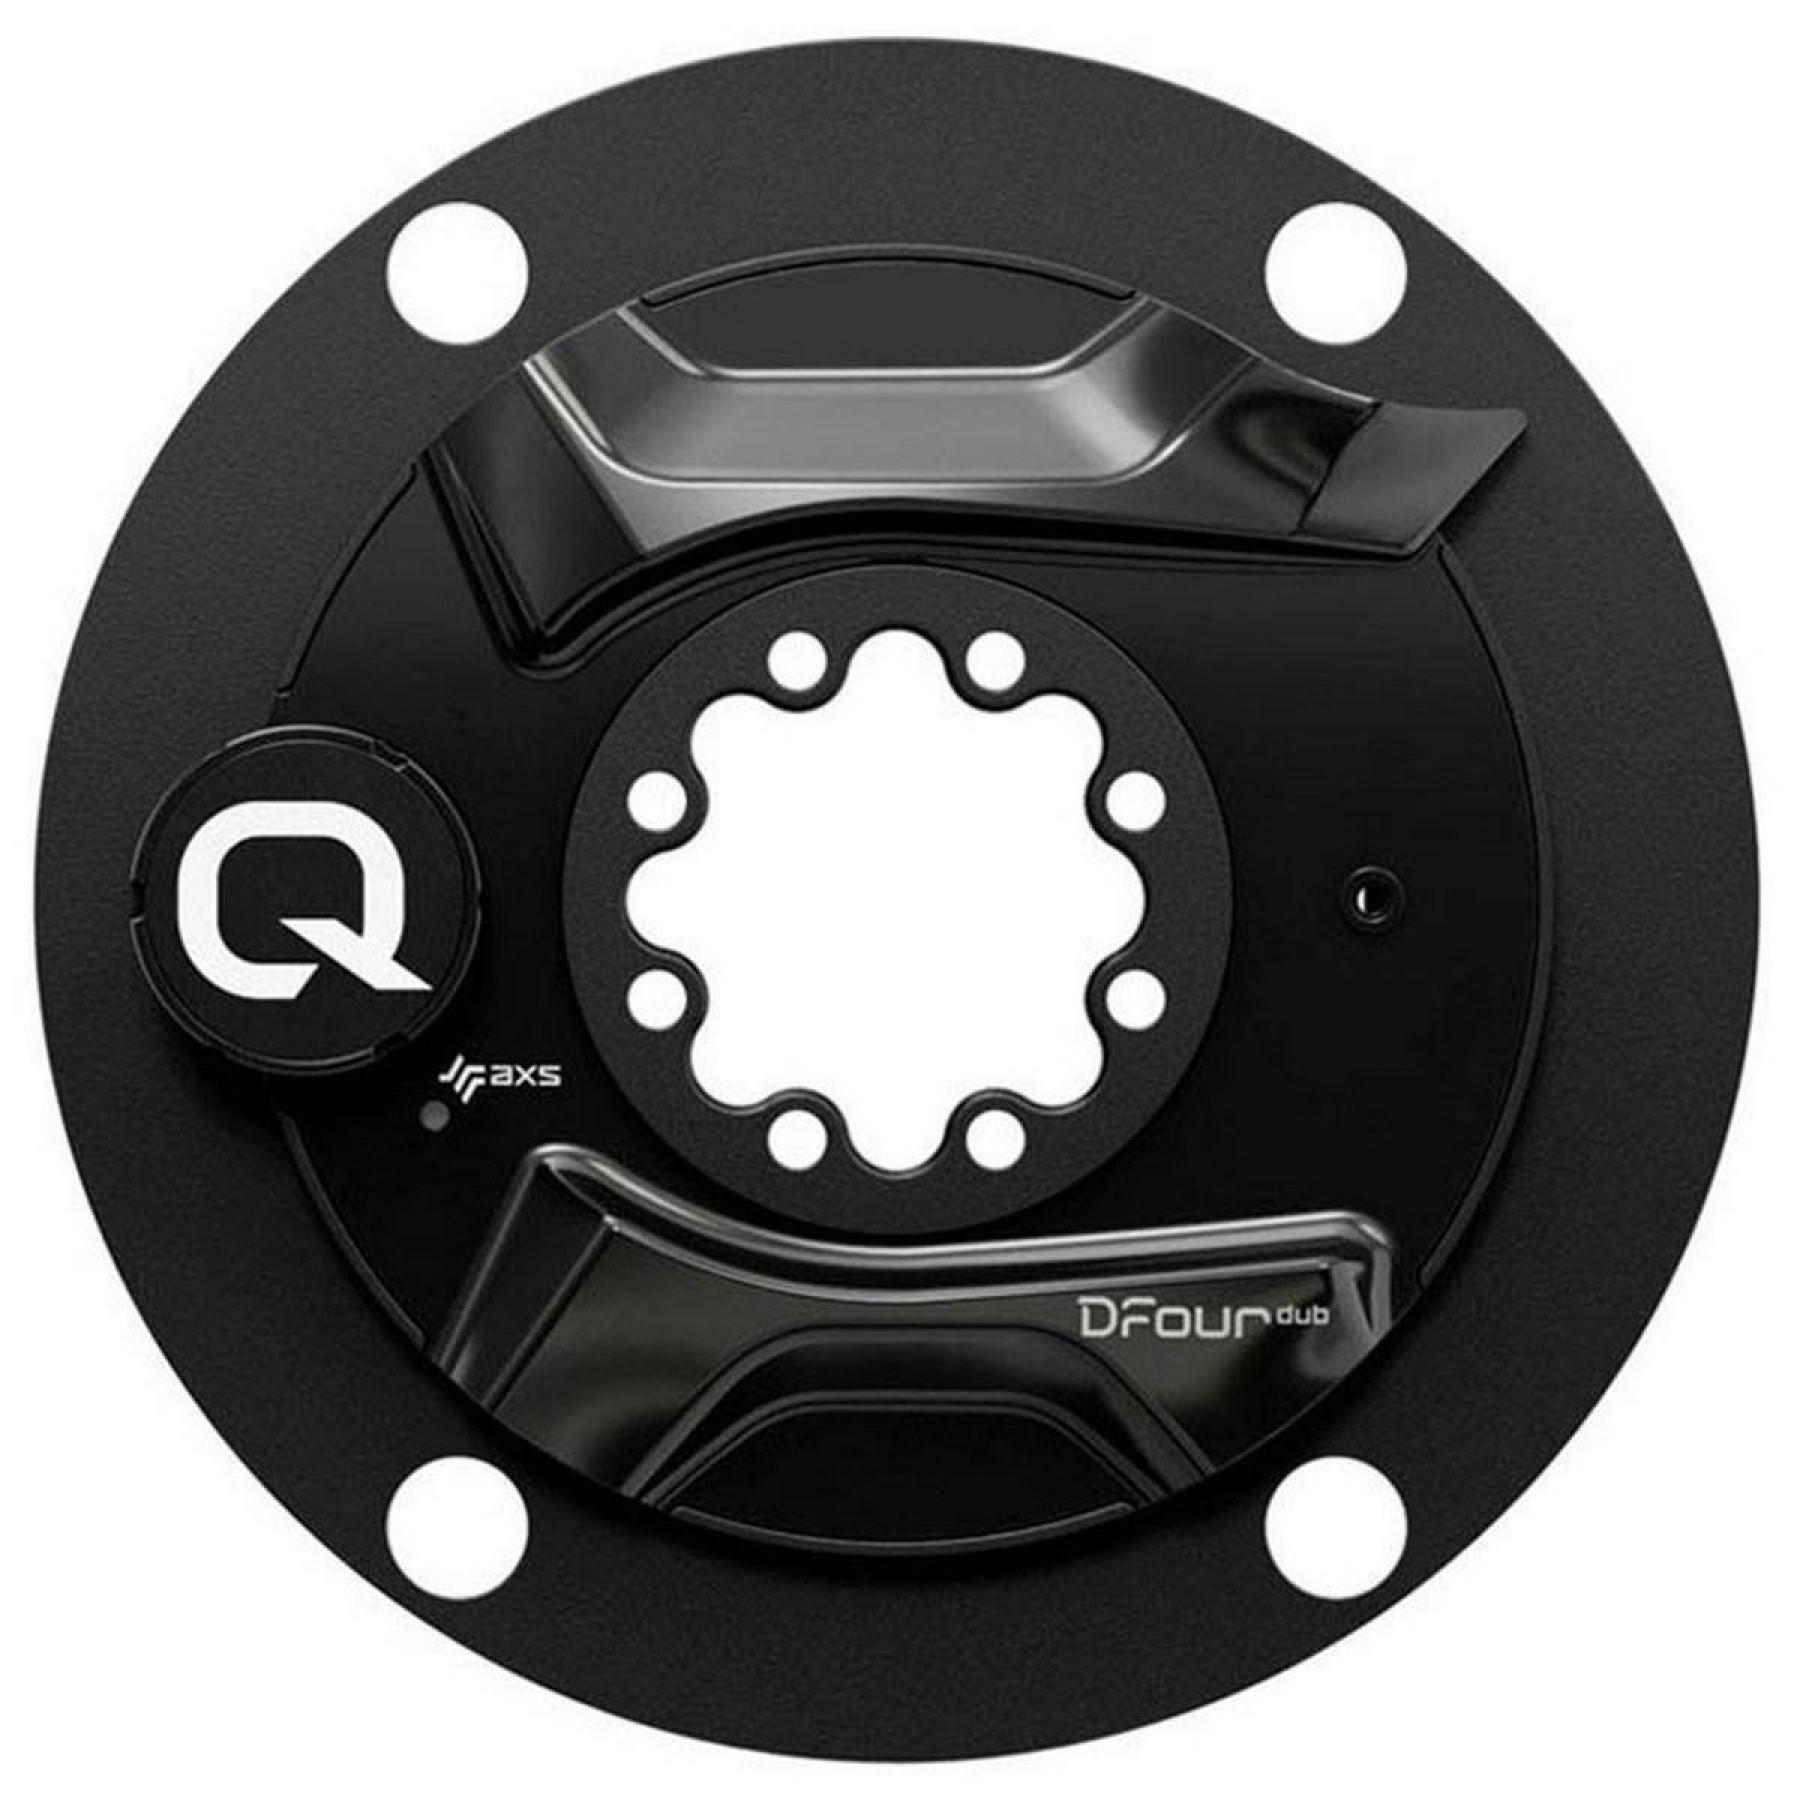 Sensore di potenza Quarq Dfour dub 110BCD Shimano (BB not in)